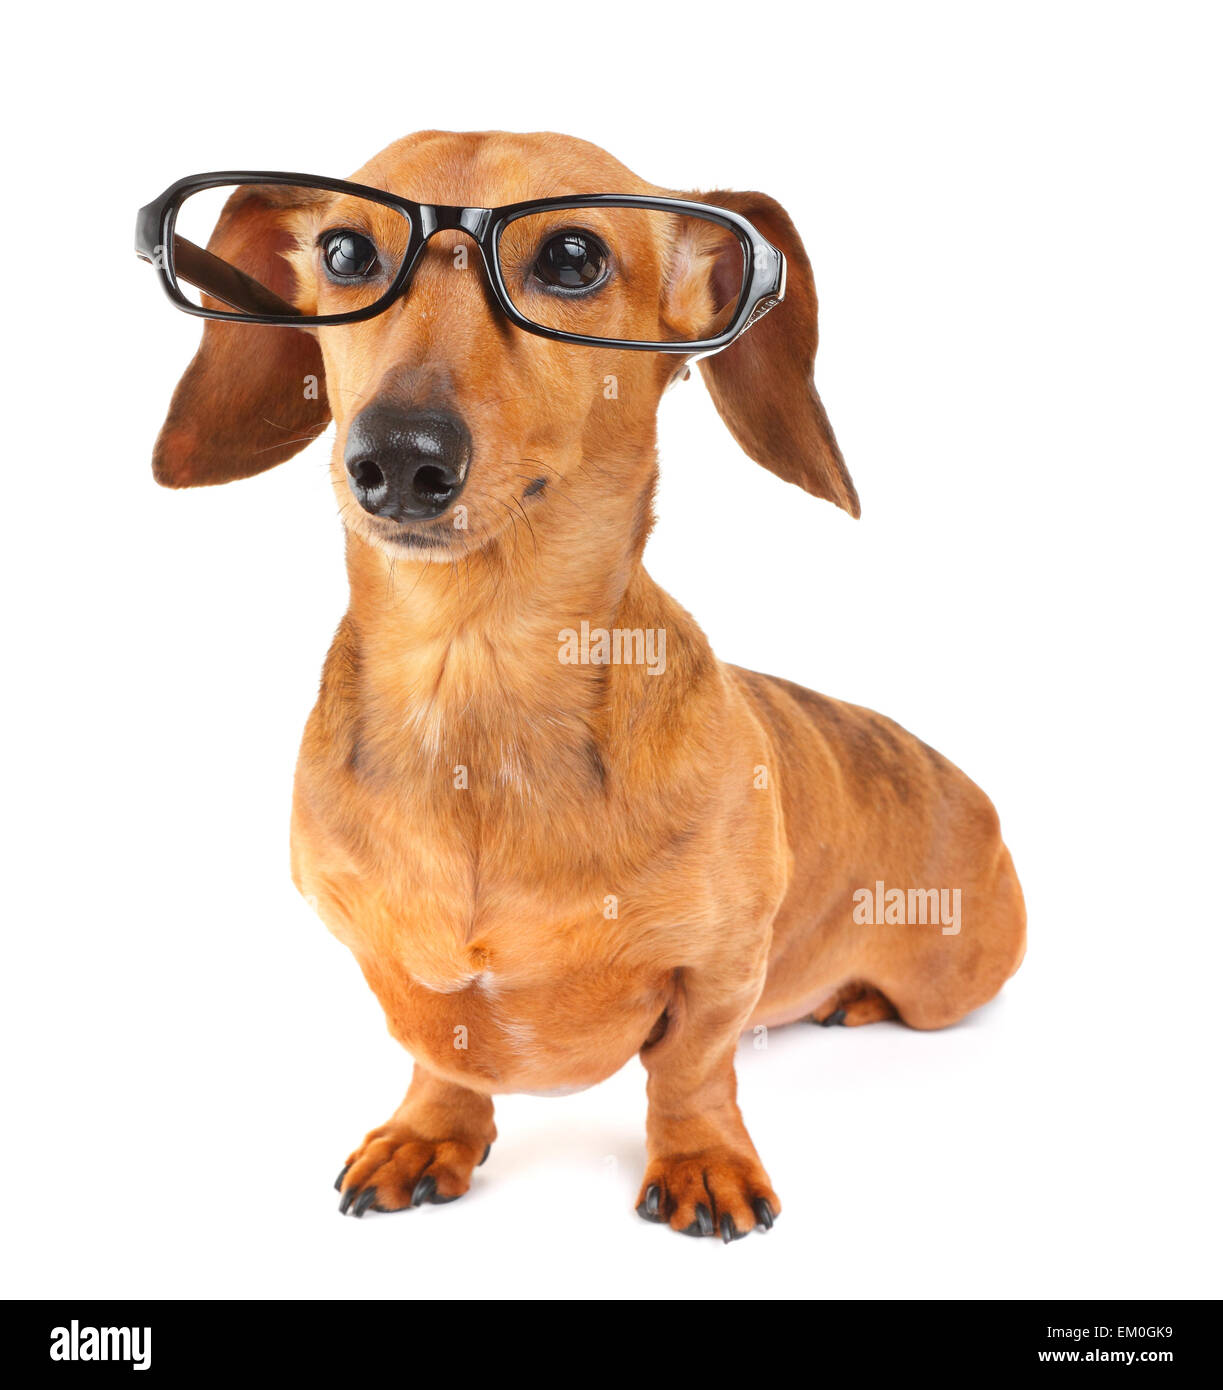 Dachshund dog with glasses Stock Photo - Alamy